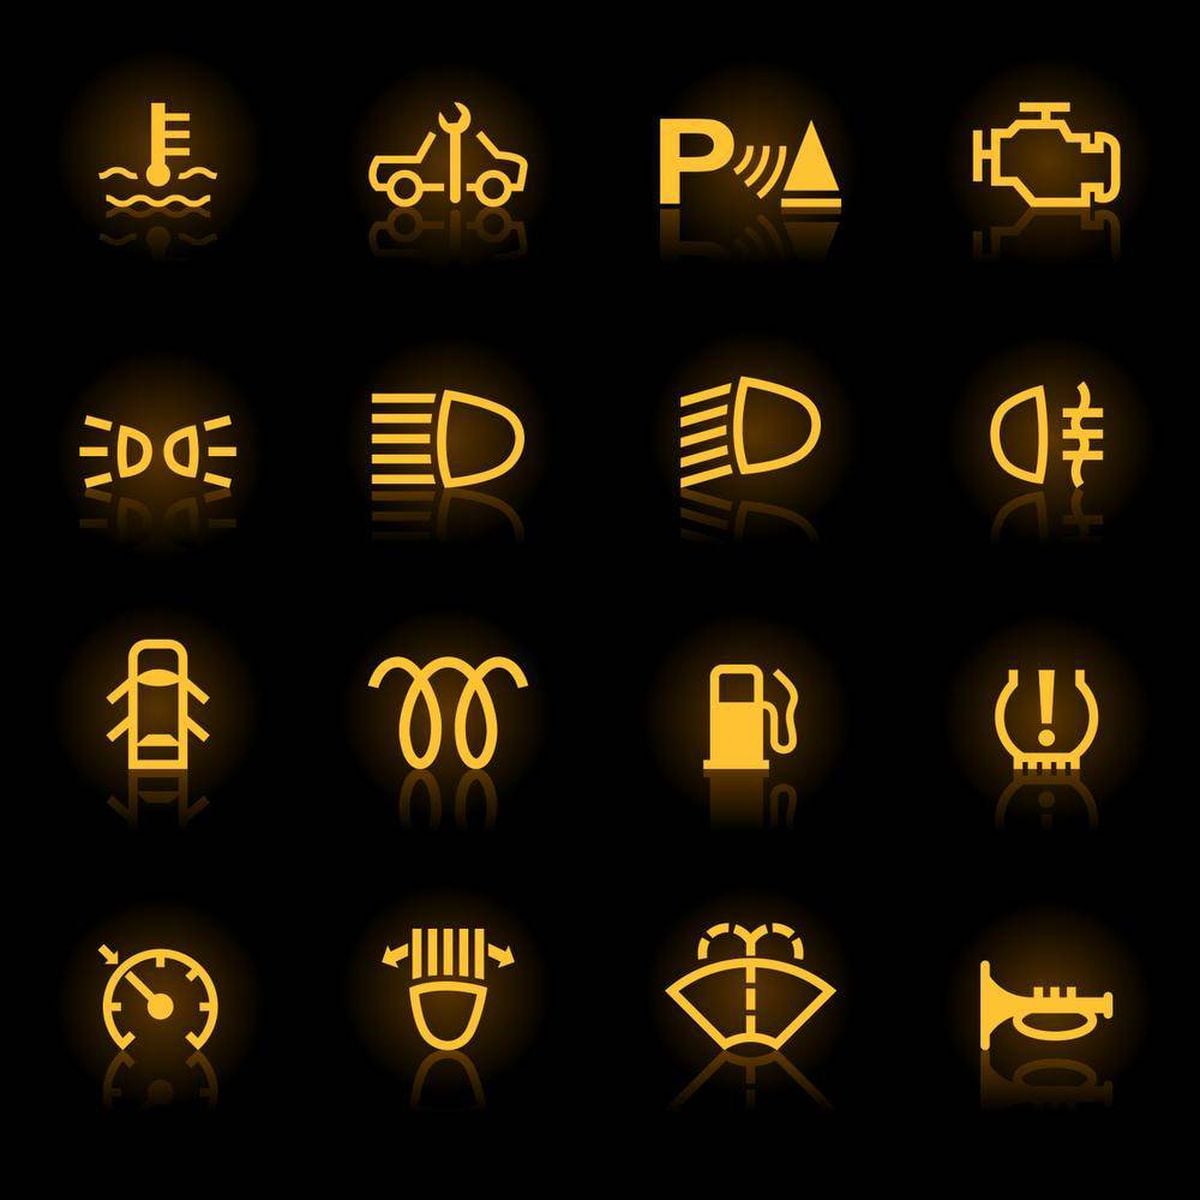 2014 nissan murano dashboard symbols